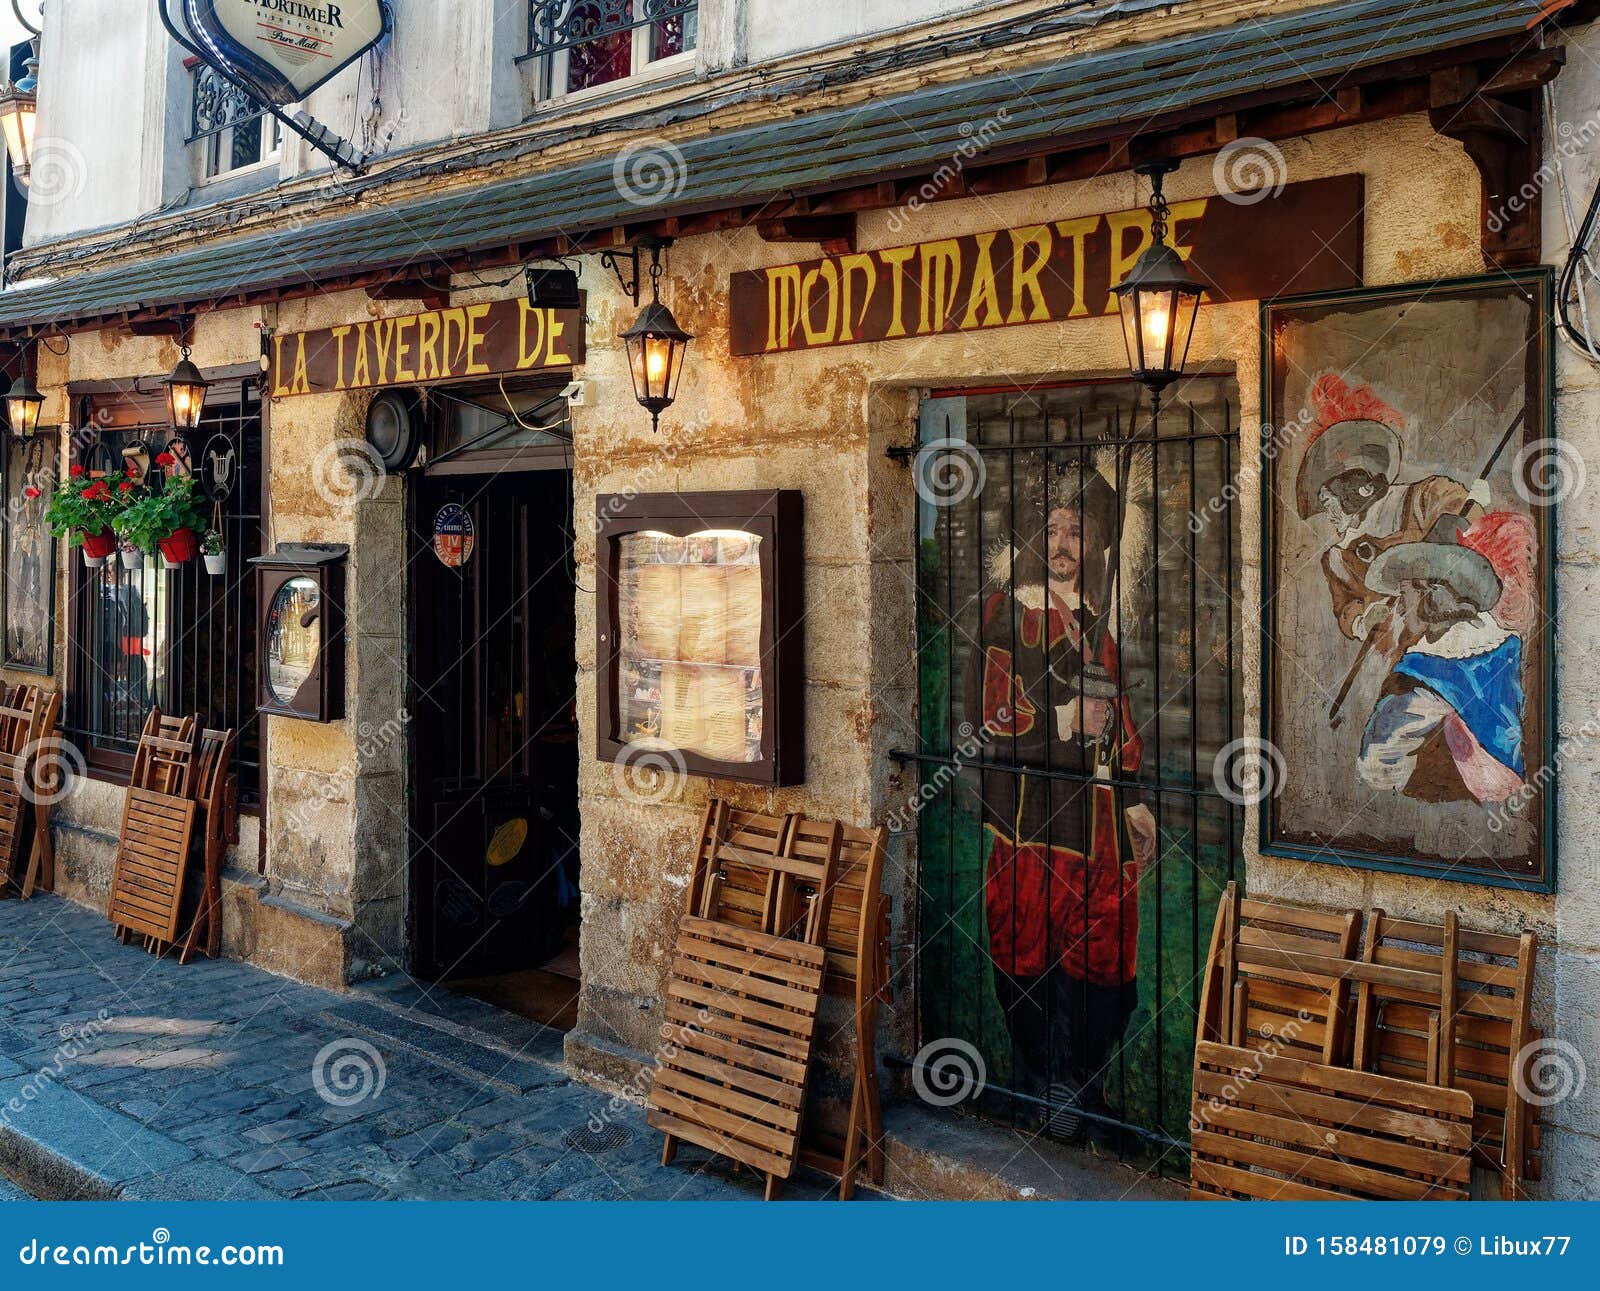 Vintage Tavern in Montmartre Paris France Editorial Stock Image - Image